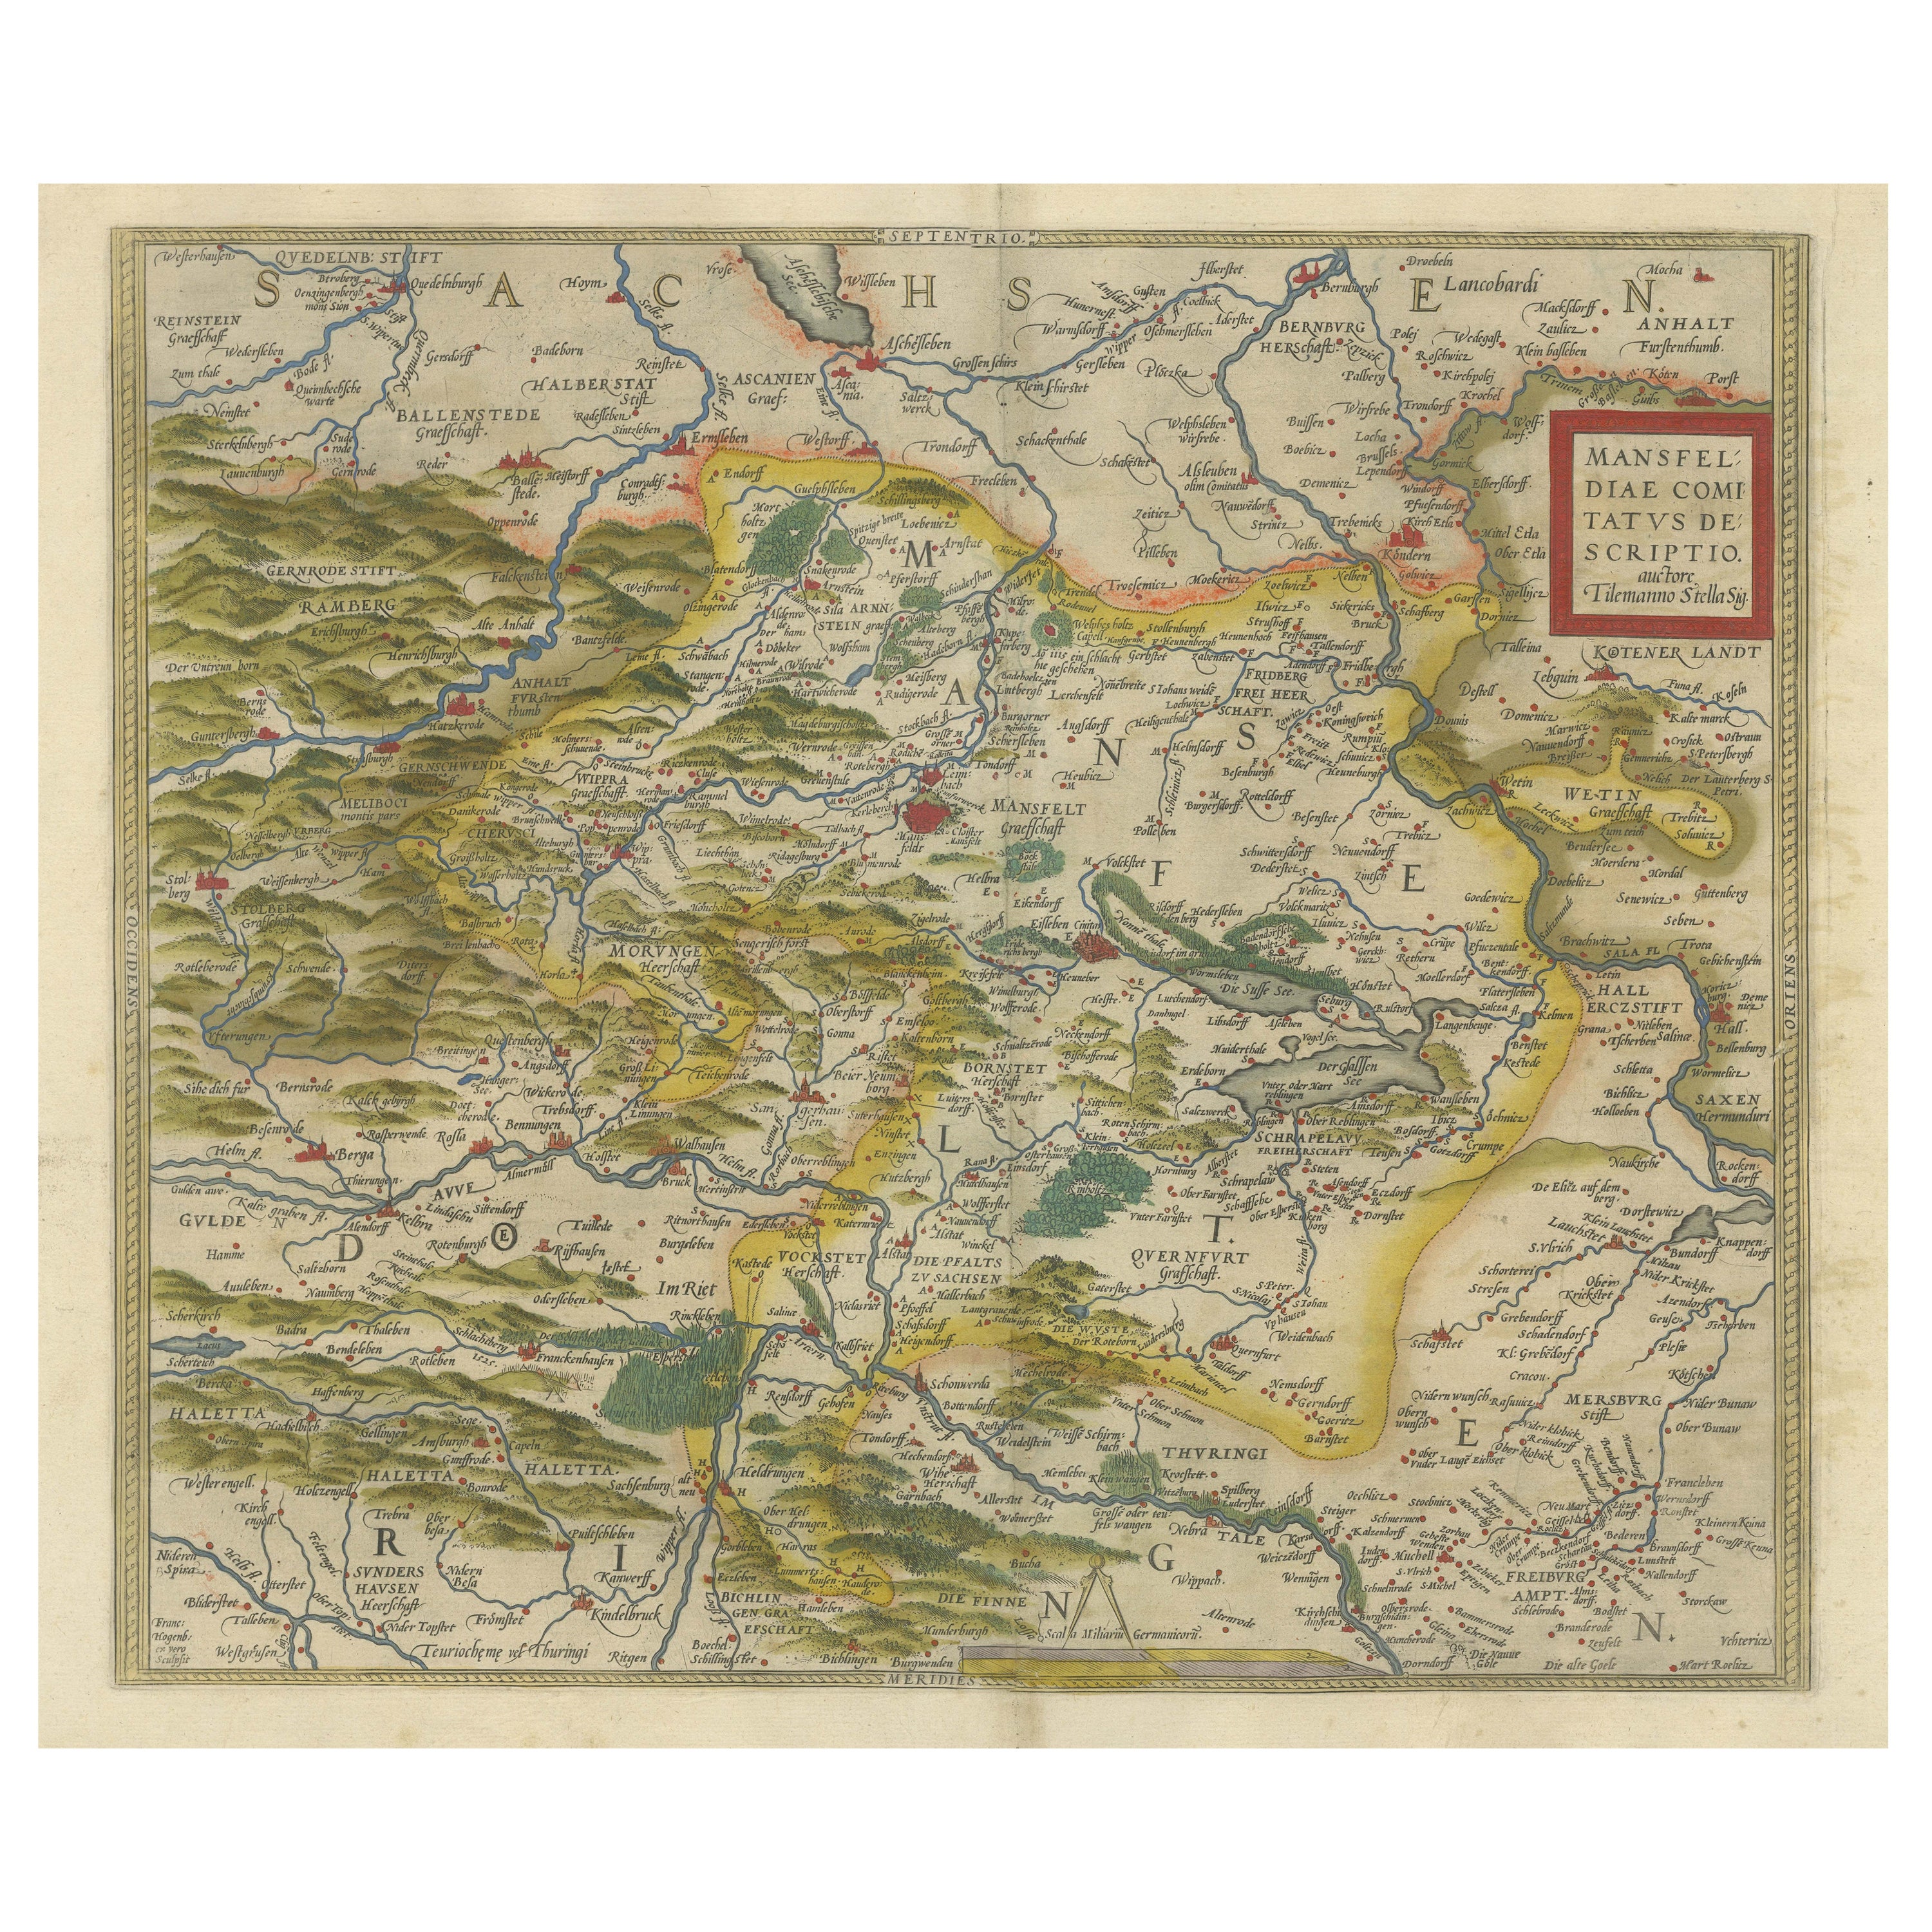 Antique Map of the Region of Mansfeld, Saxony-Anhalt, Germany